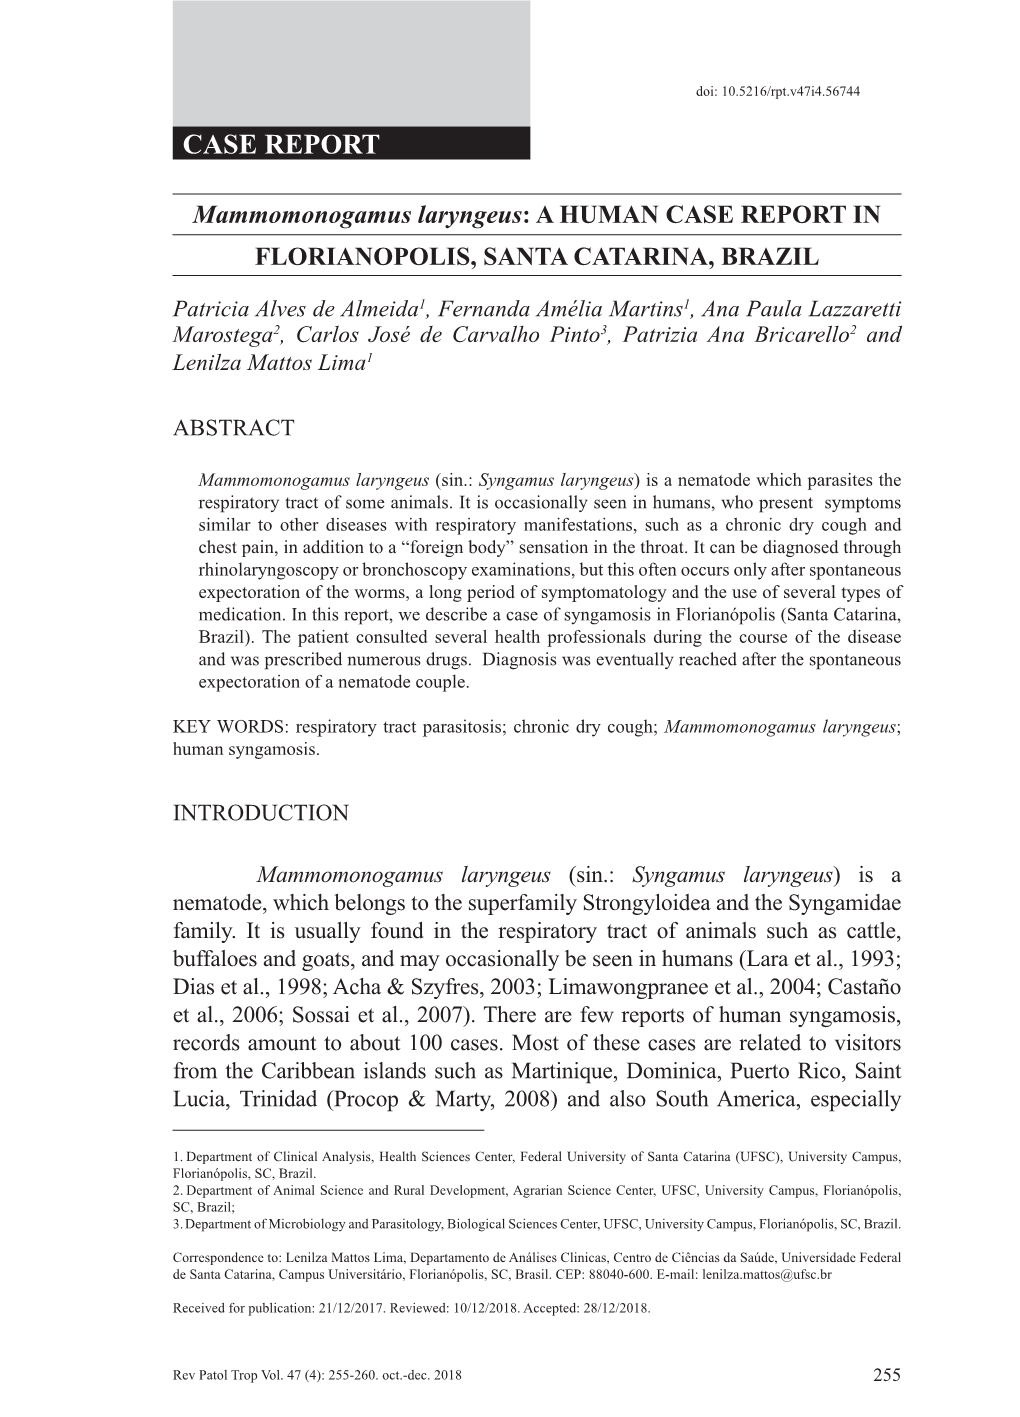 Mammomonogamus Laryngeus: a HUMAN CASE REPORT in FLORIANOPOLIS, SANTA CATARINA, BRAZIL